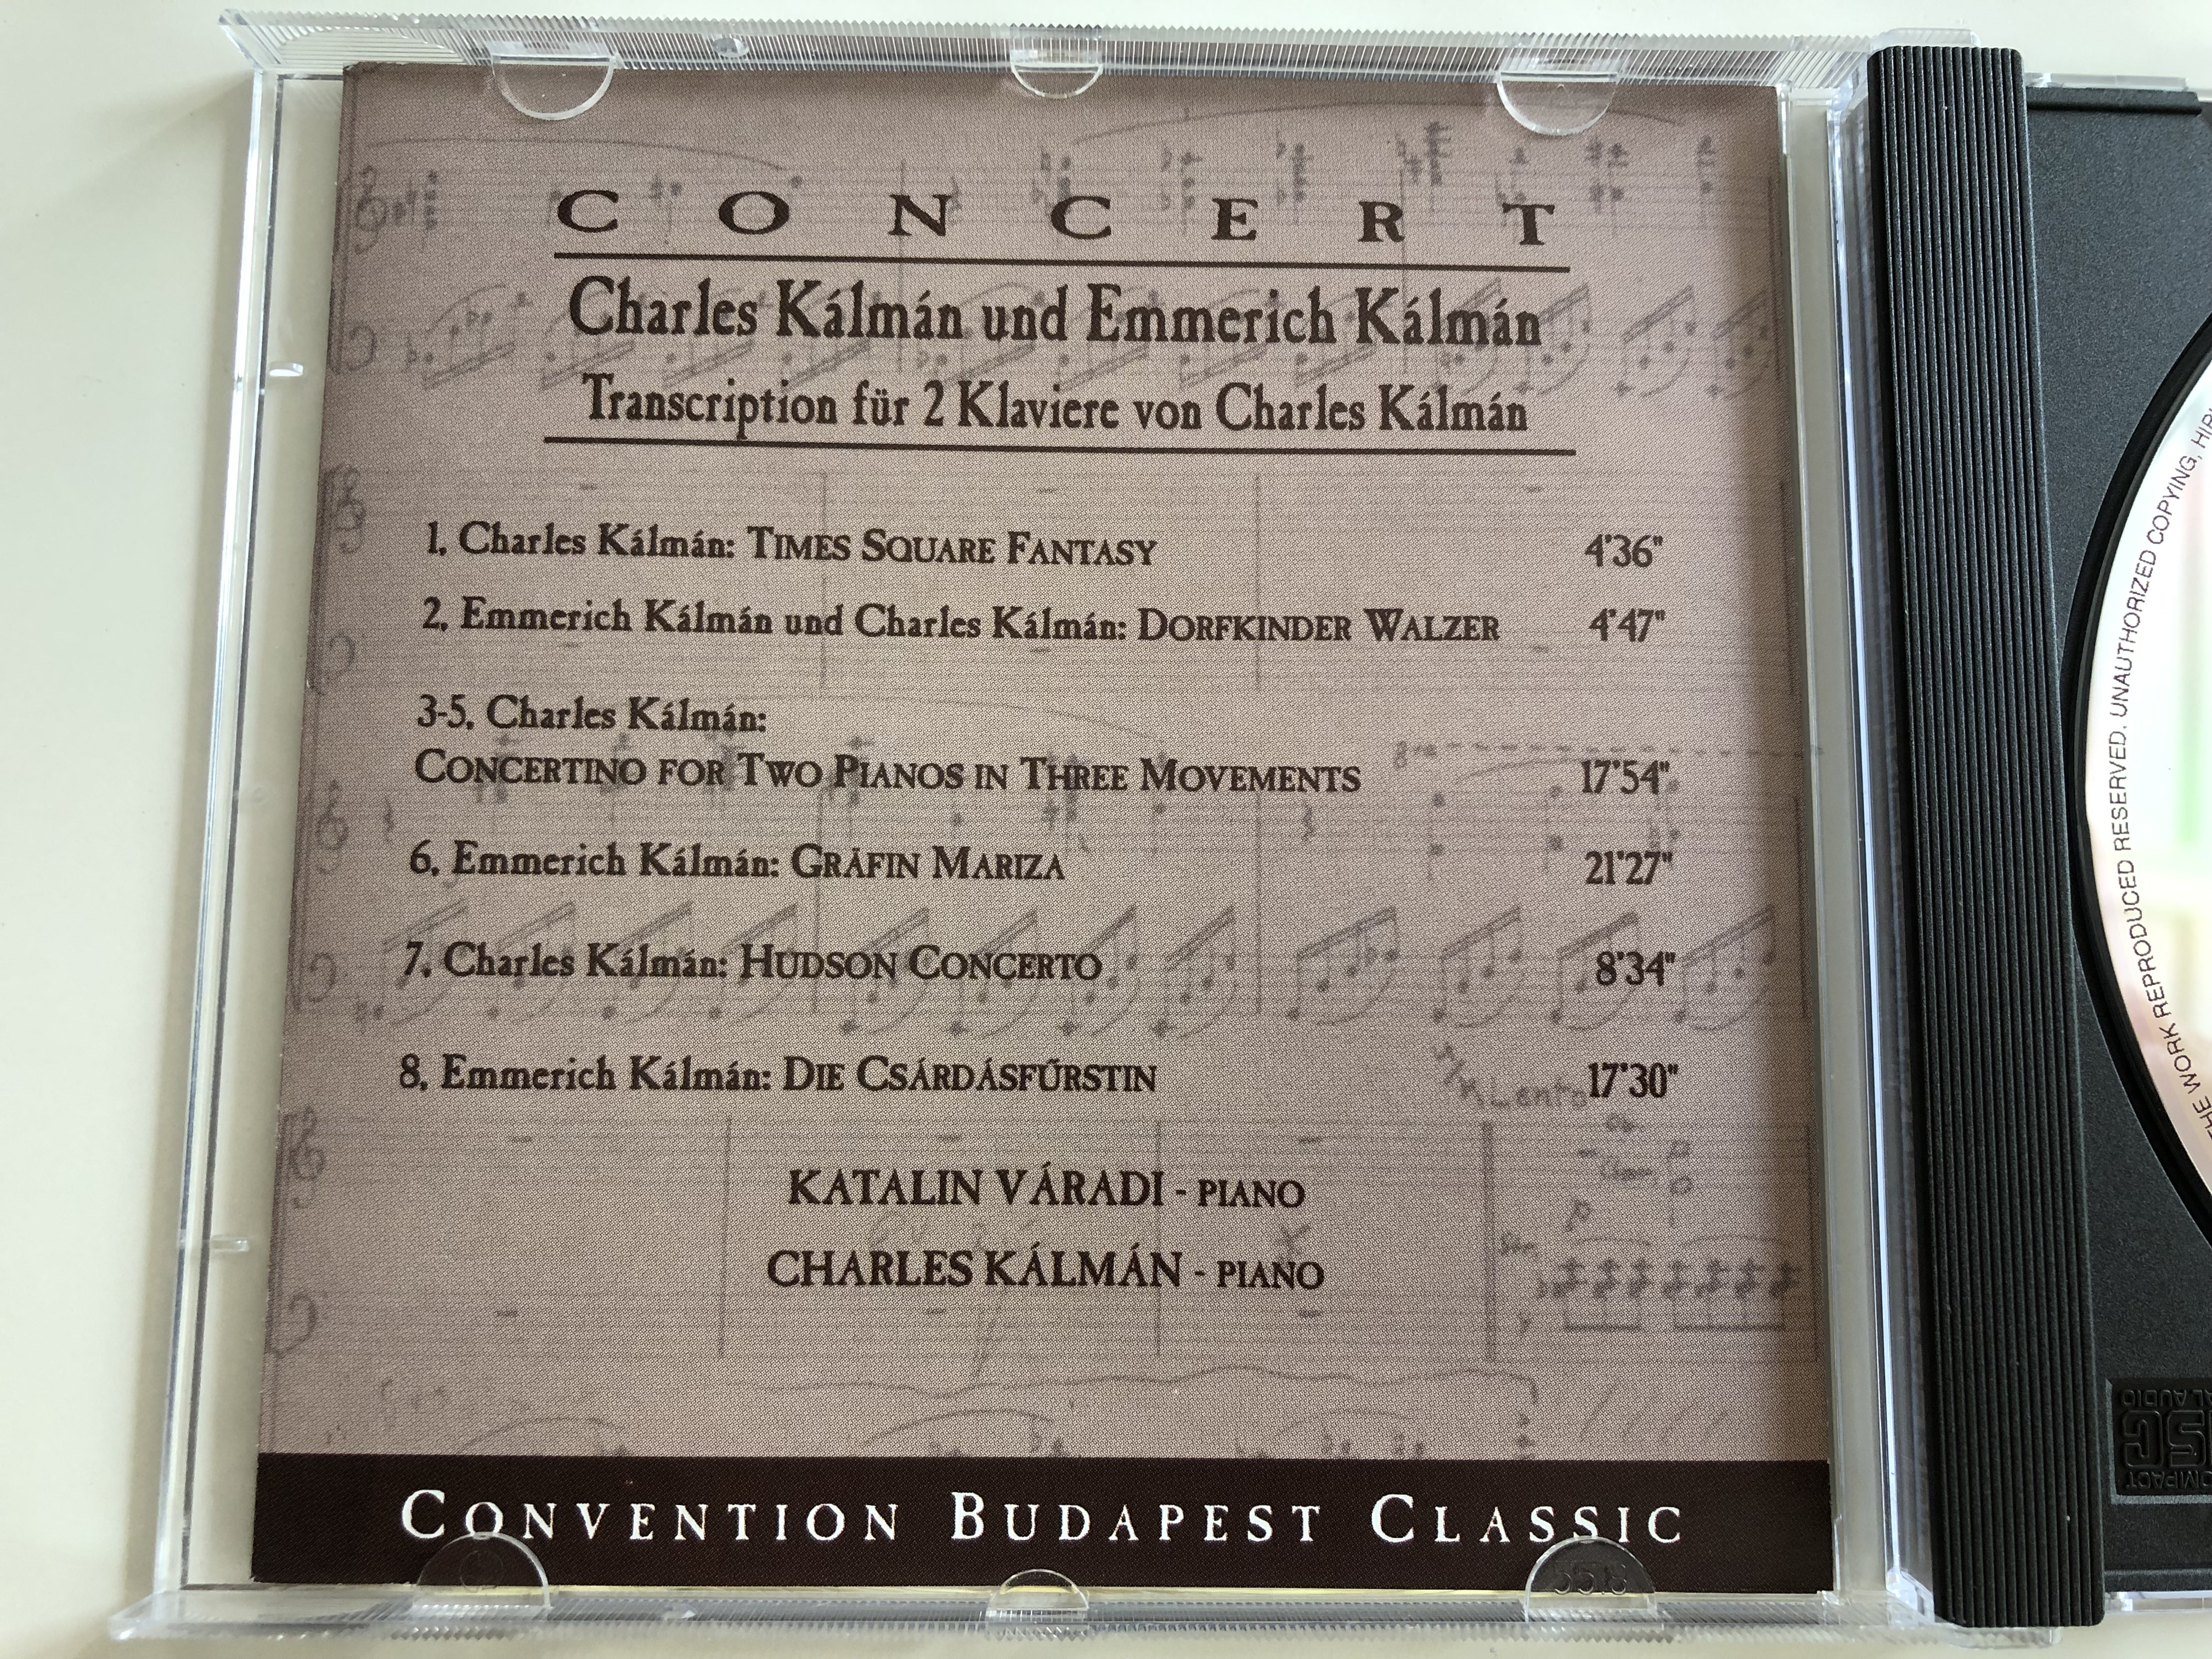 concert-charles-kalman-und-emmerich-kalman-transcription-fur-2-klaviere-von-charles-kalman-first-performance-for-two-pianos-el-sz-r-ket-zongorara-convention-budapest-classic-audio-cd-cbp-7-.jpg